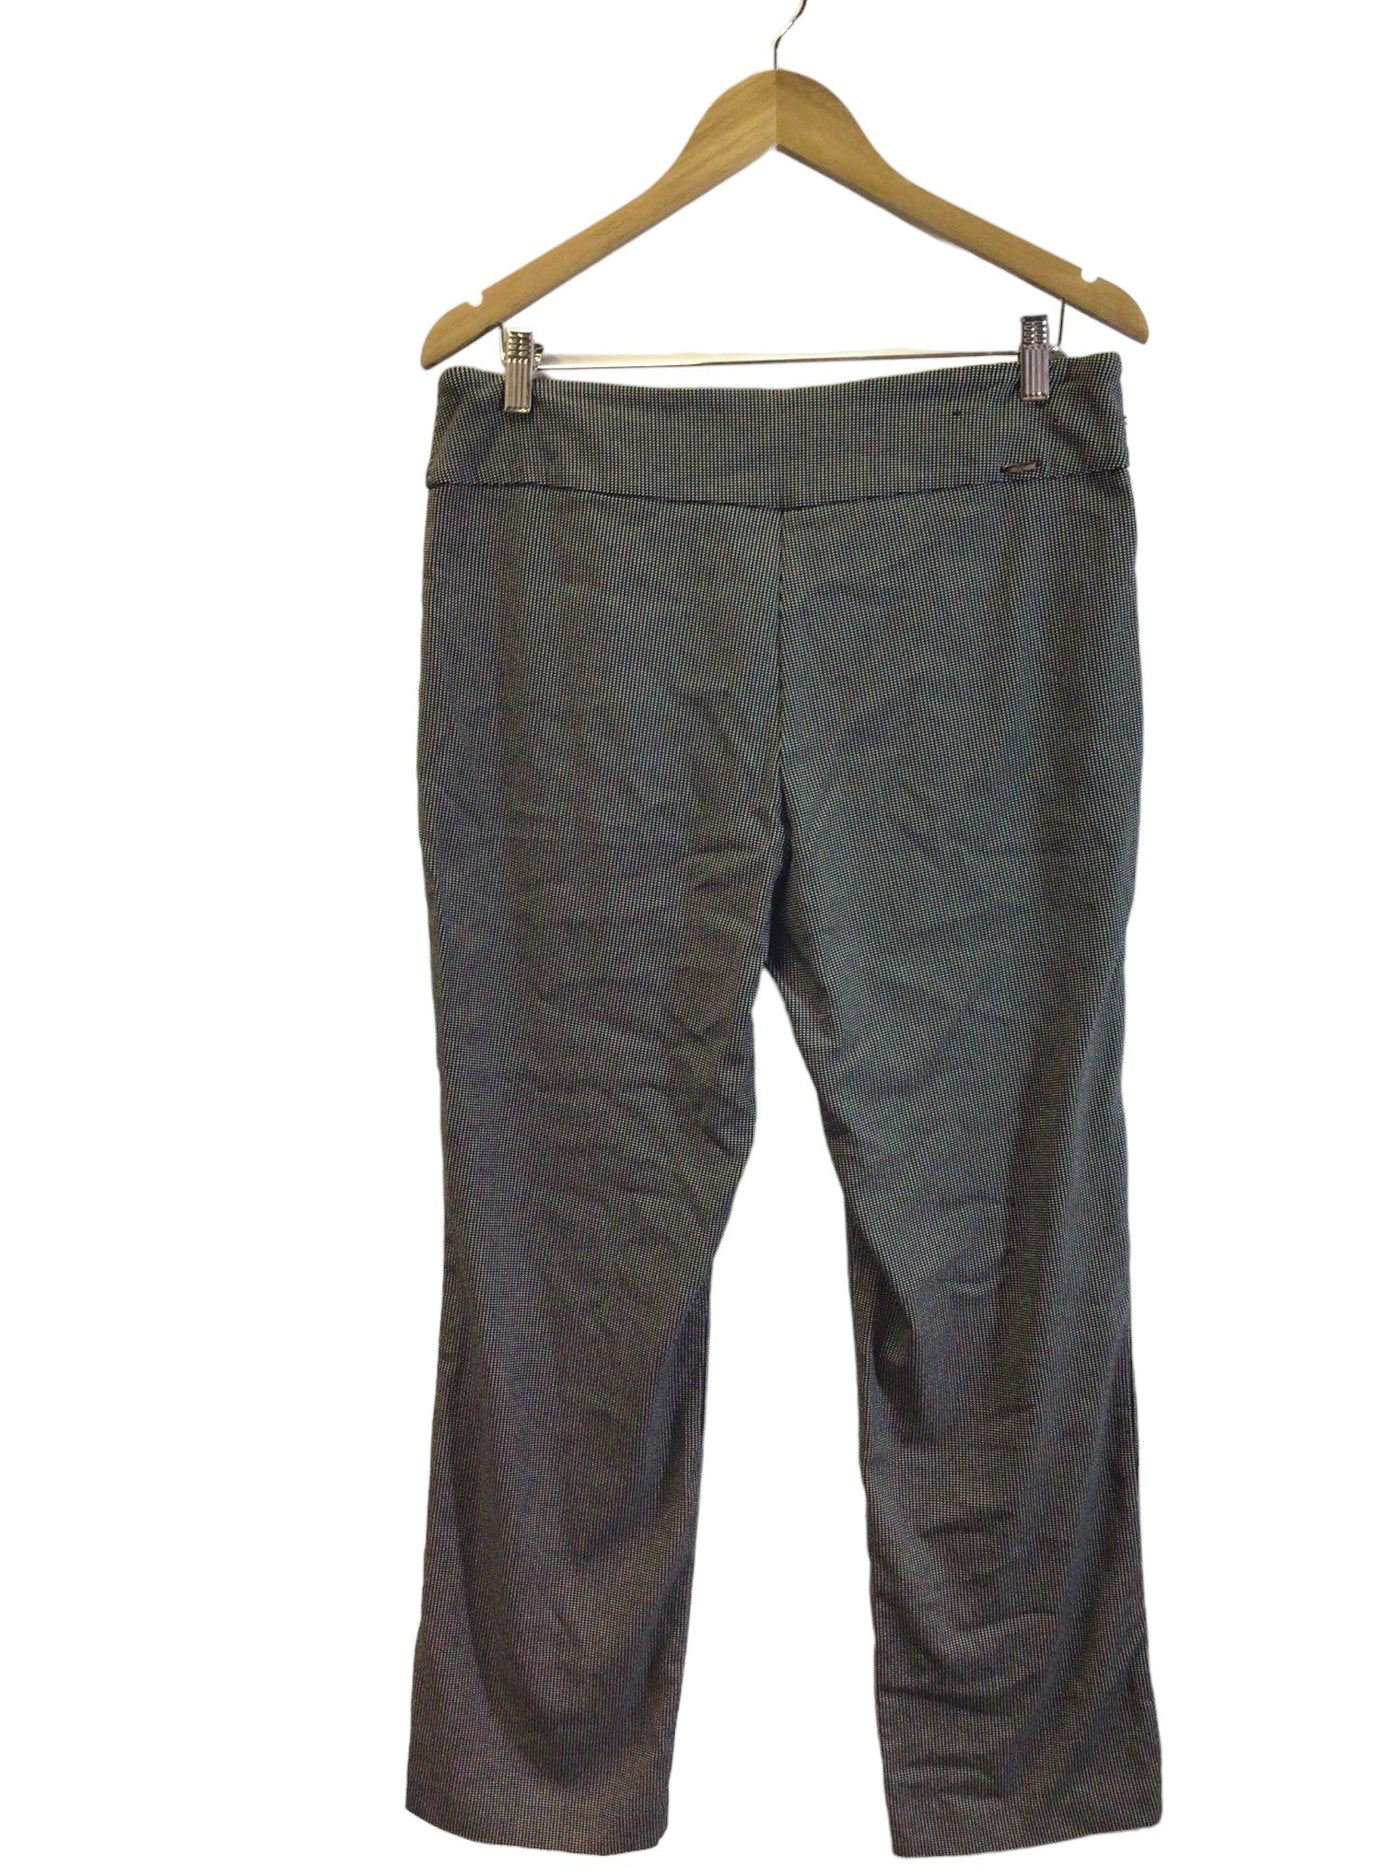 S.C. & CO. Women Work Pants Regular fit in Black - Size 14 | 11.29 $ KOOP